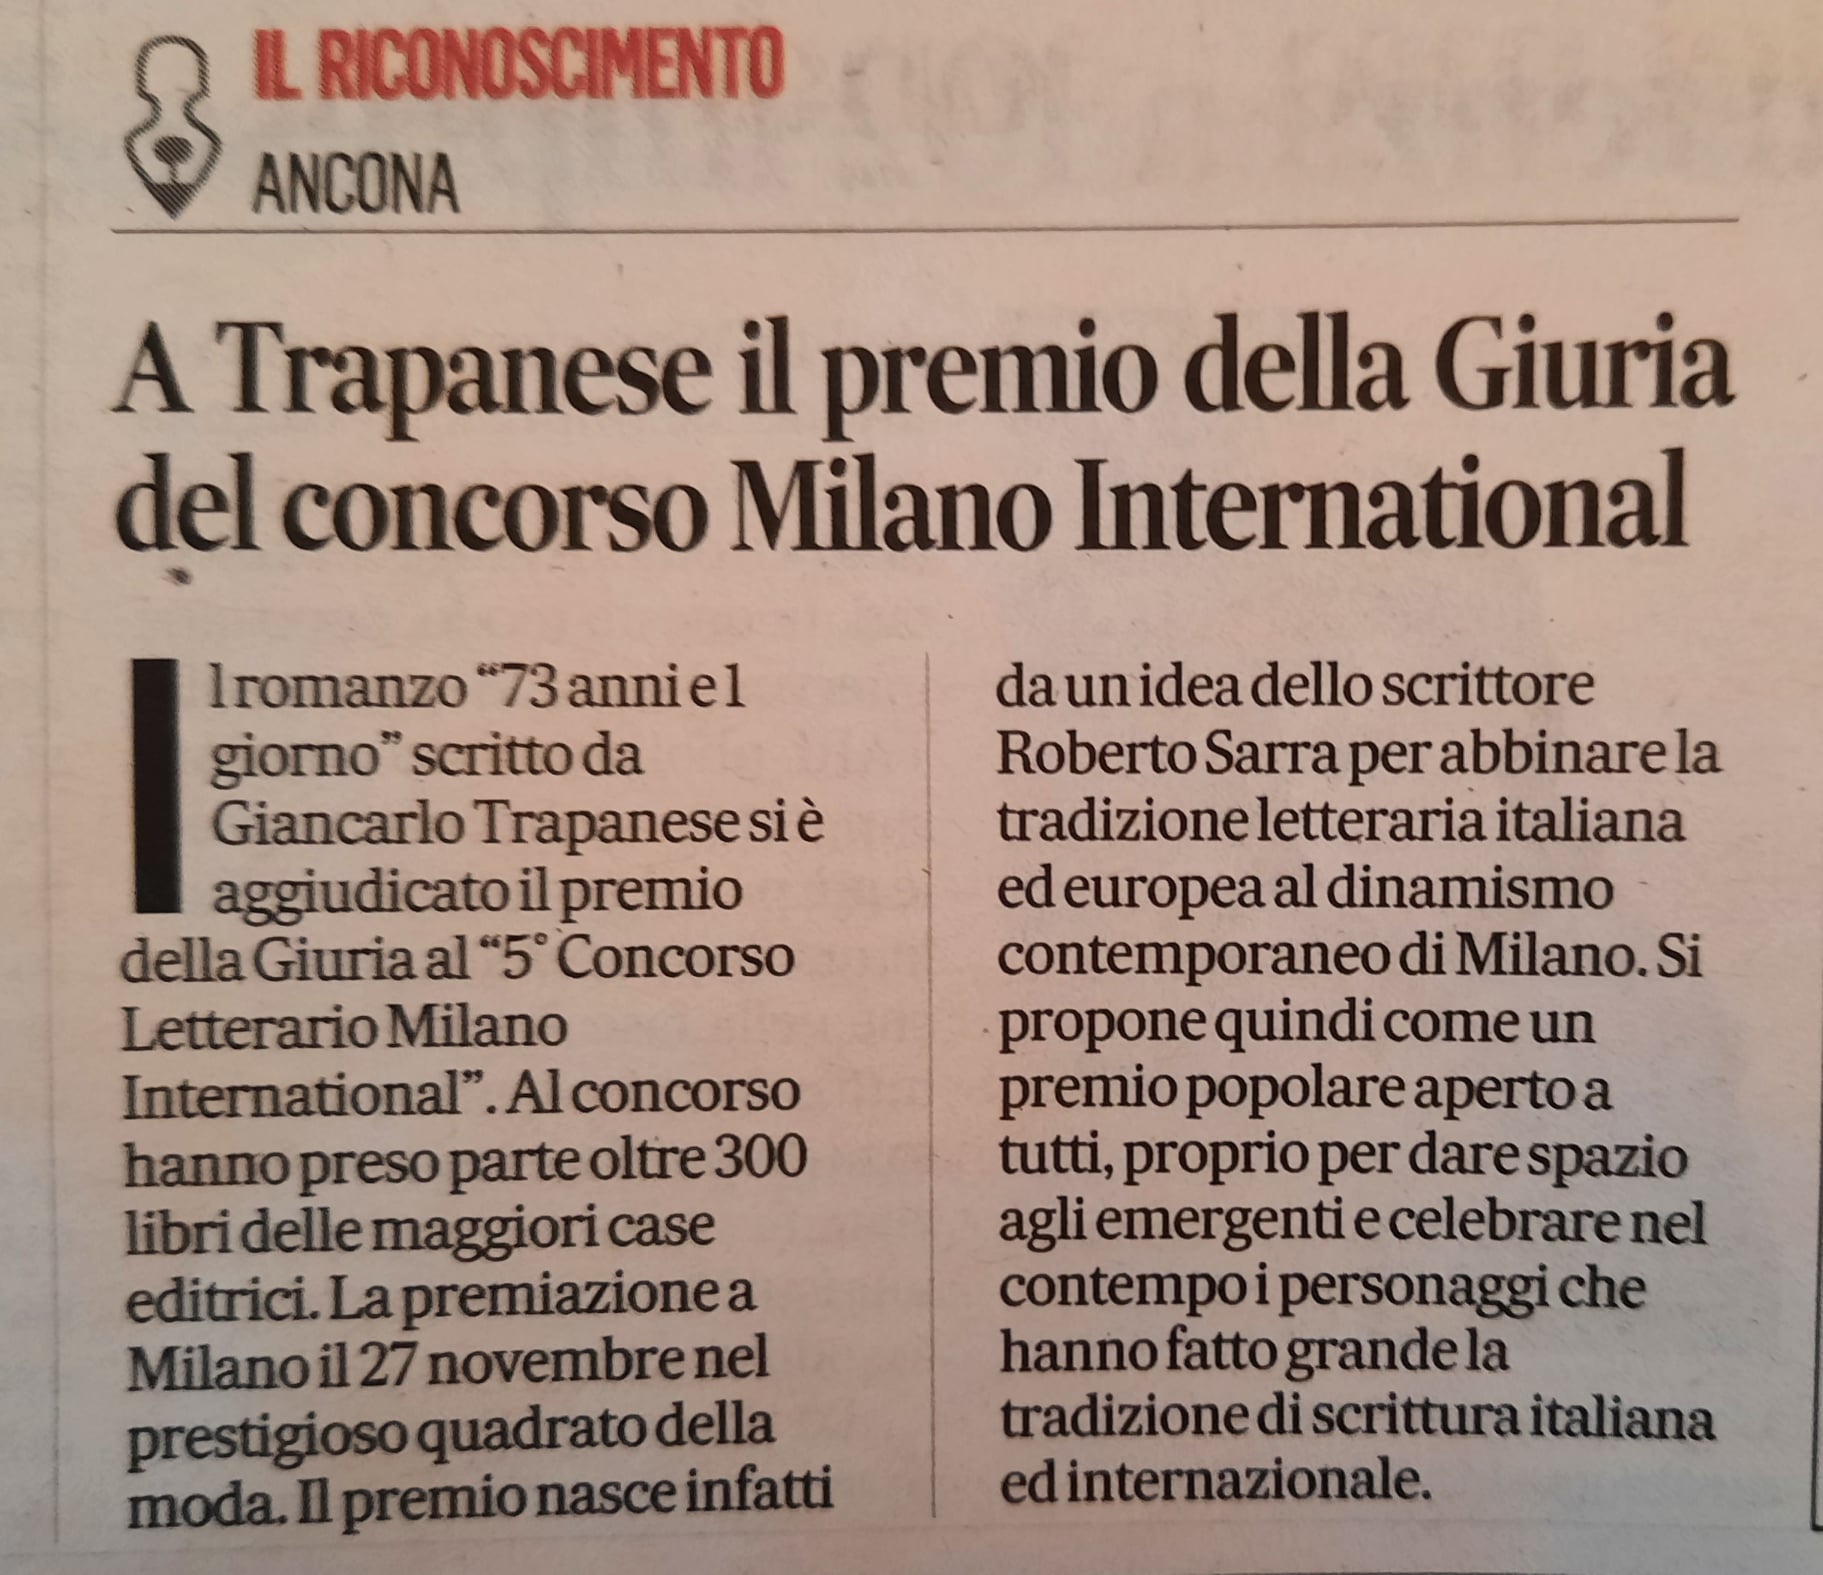 Corriere Adriatico - Premio a Giancarlo Trapanese - Milano International